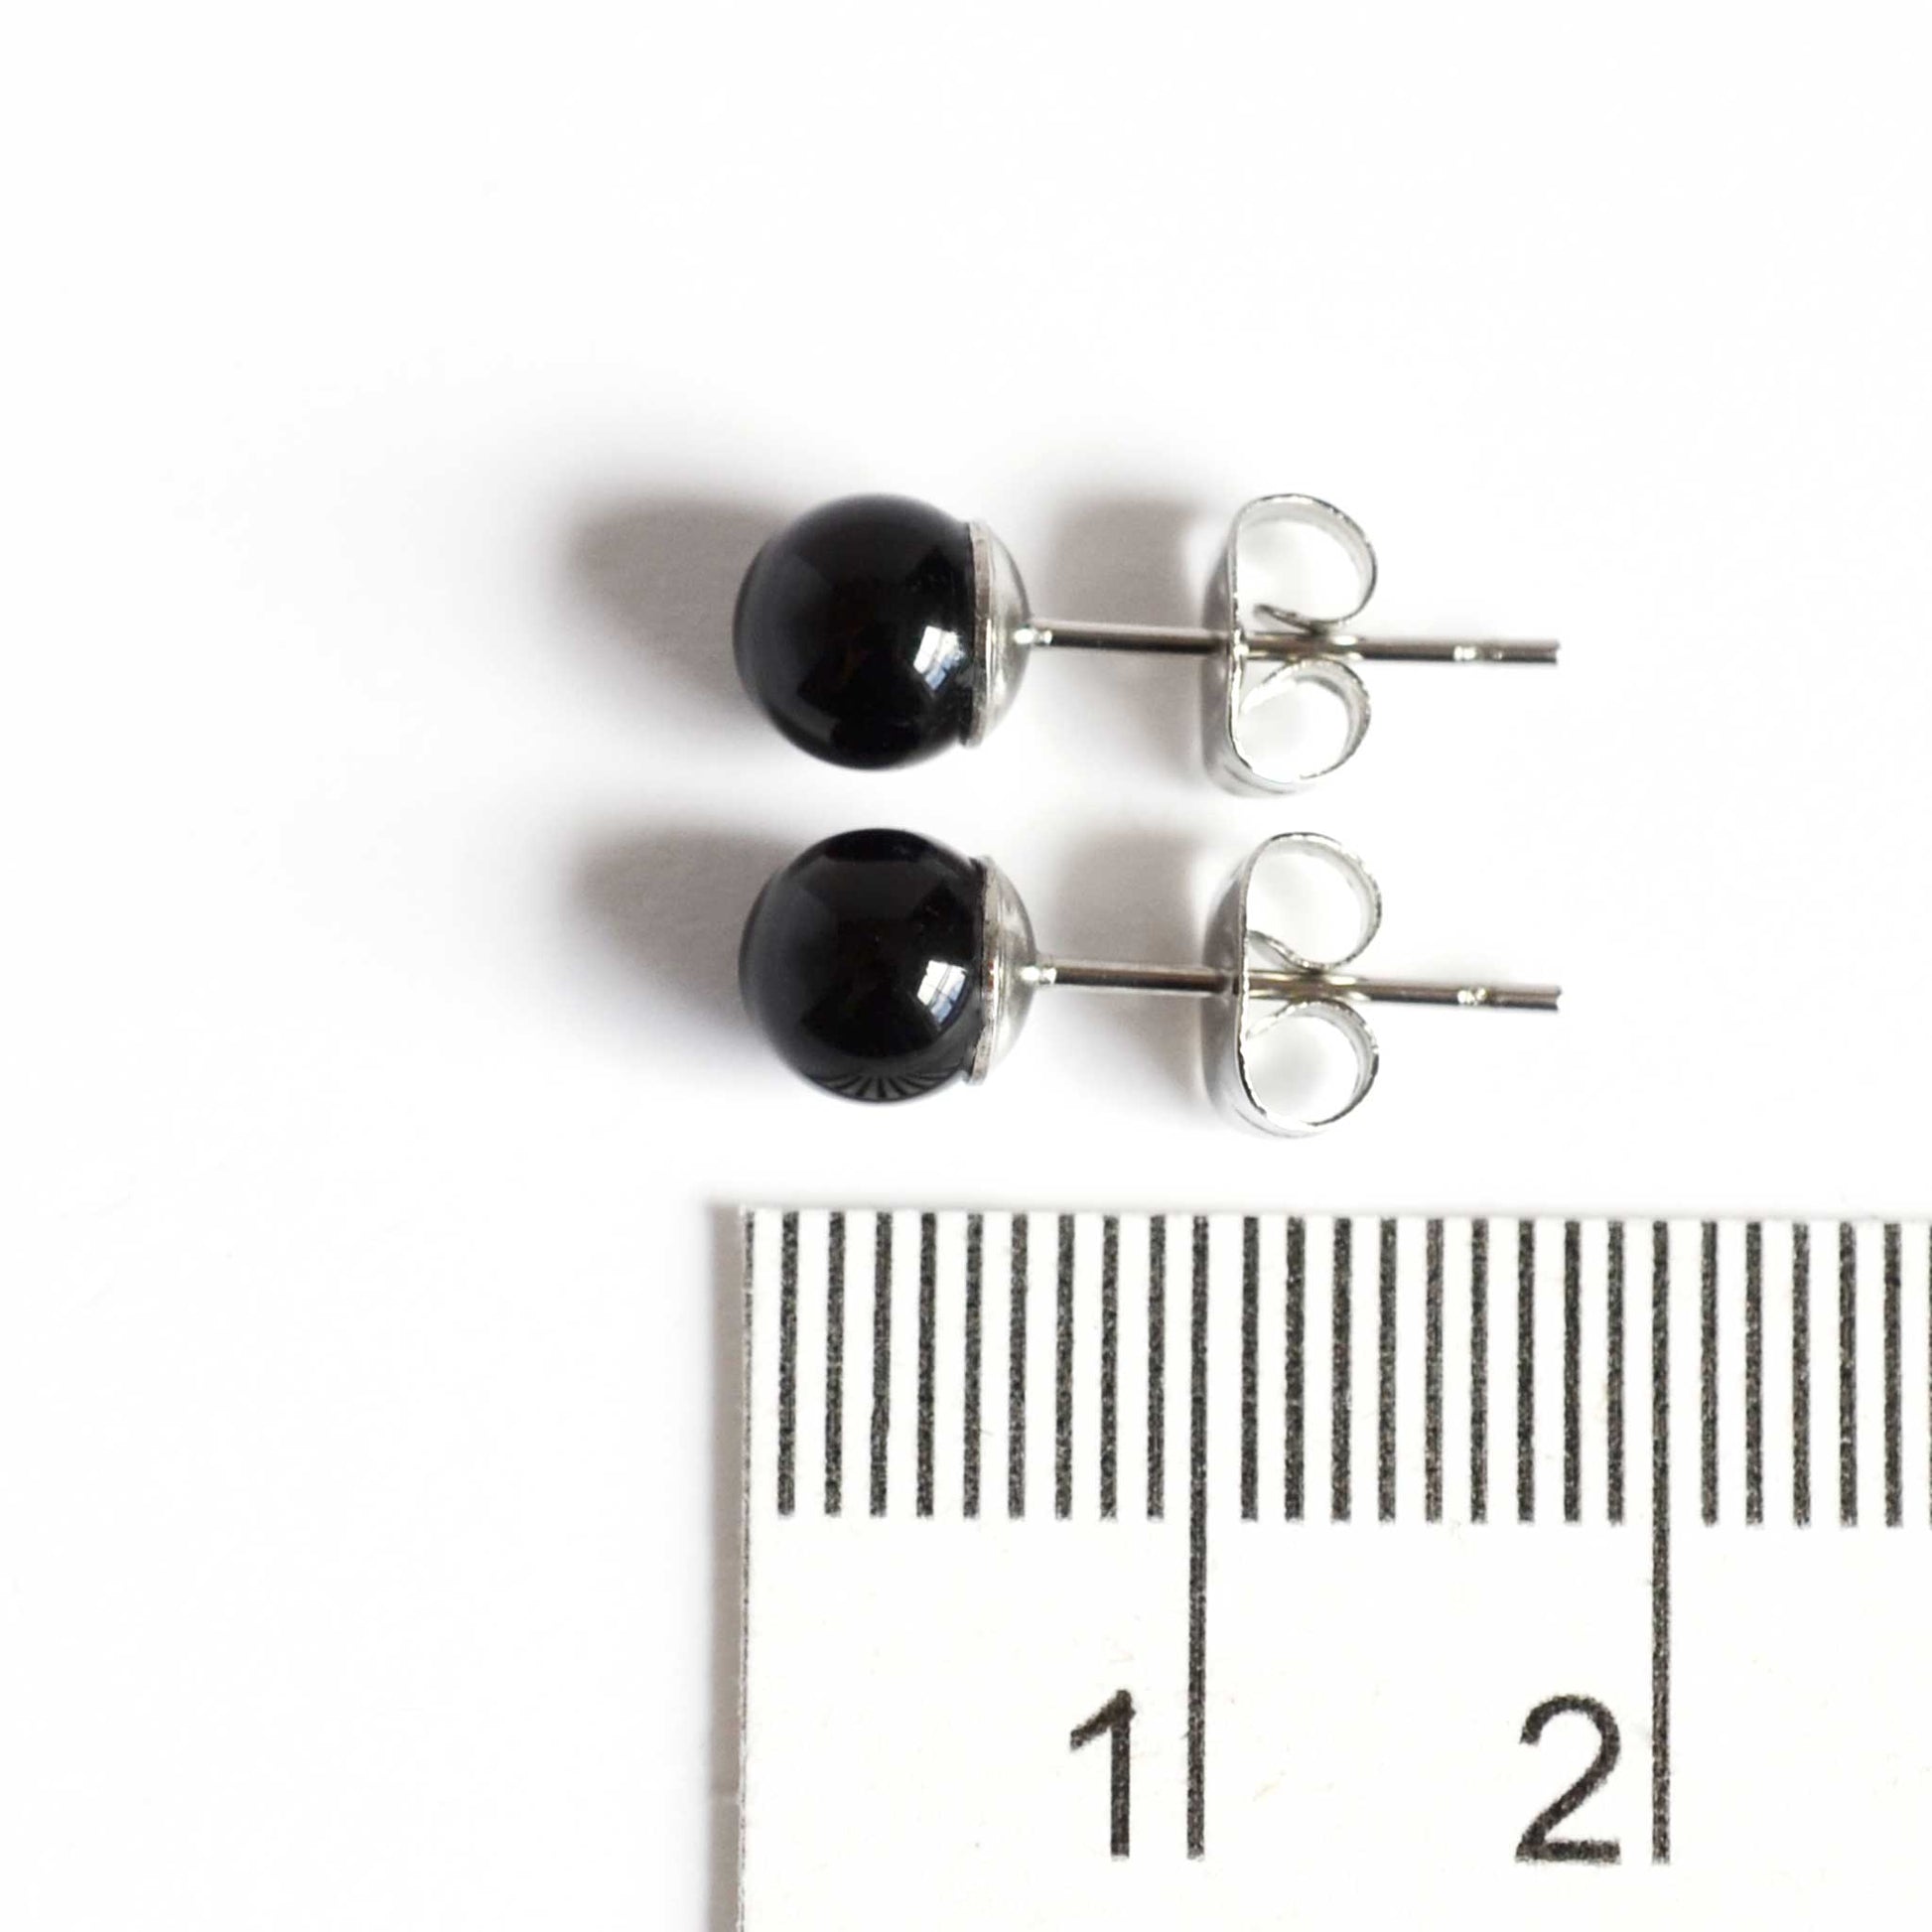 6mm black Onyx earrings next to ruler